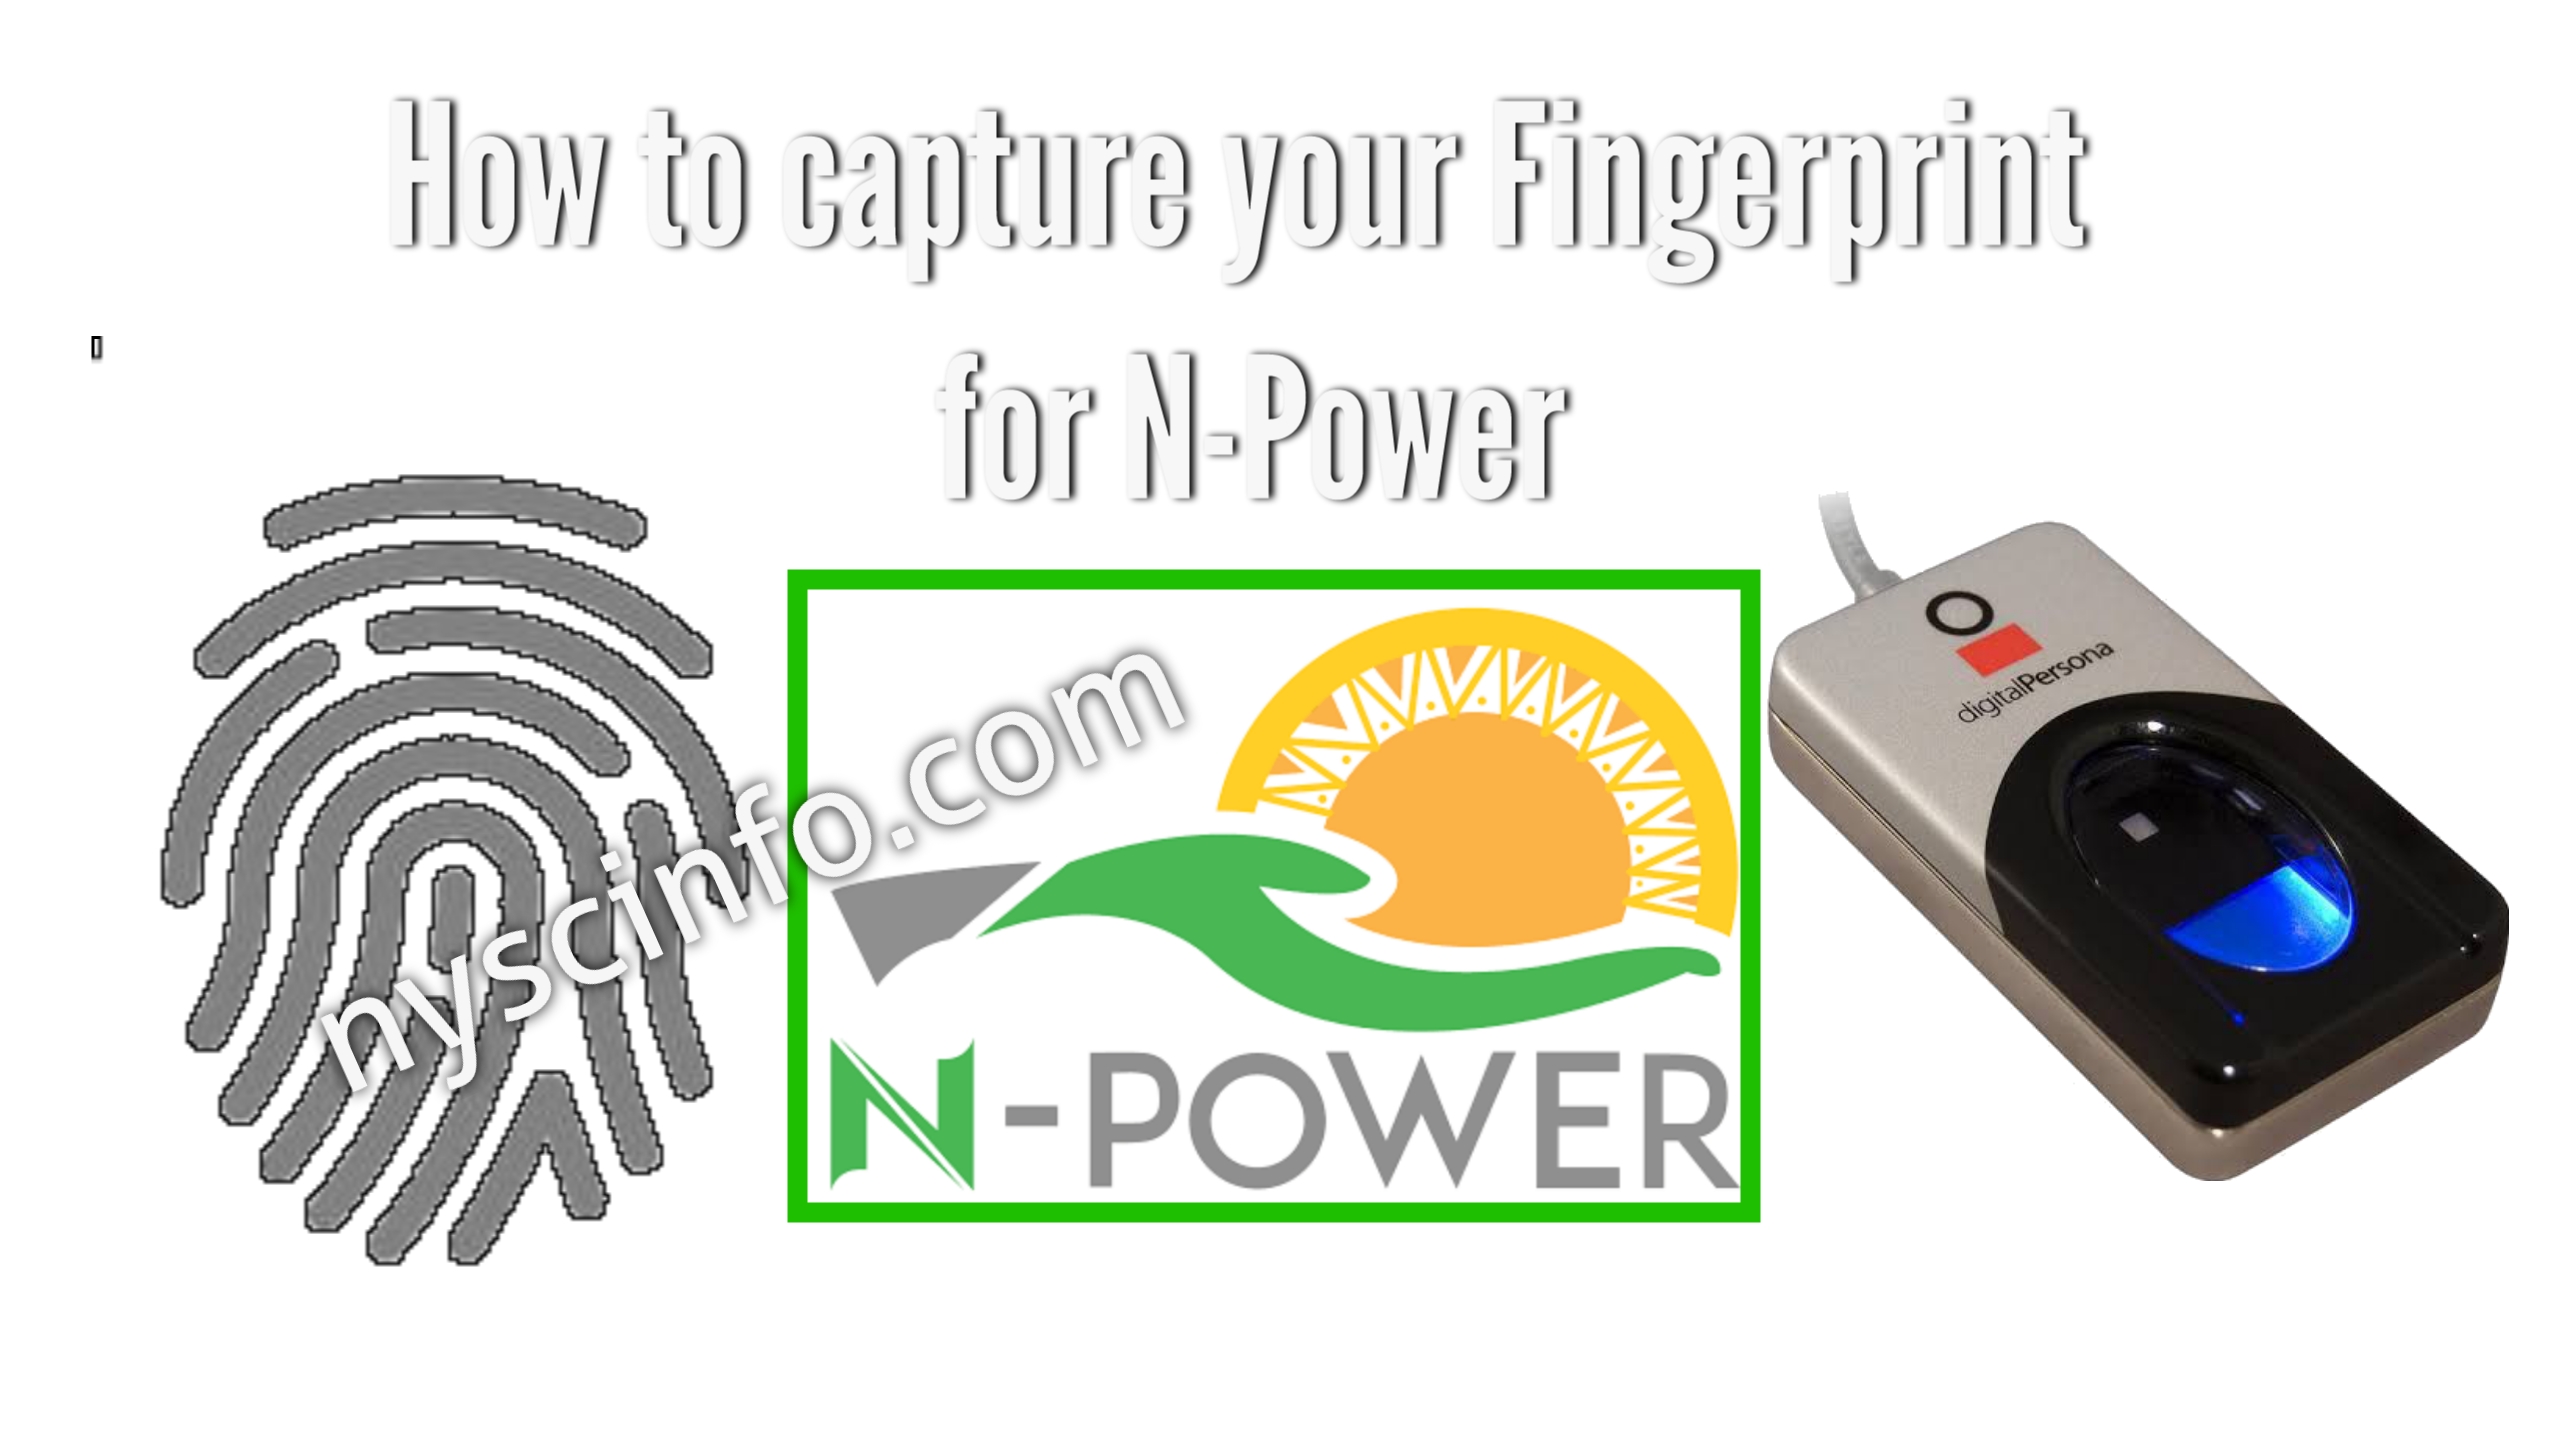 How to capture your Fingerprint for Npower Batch C